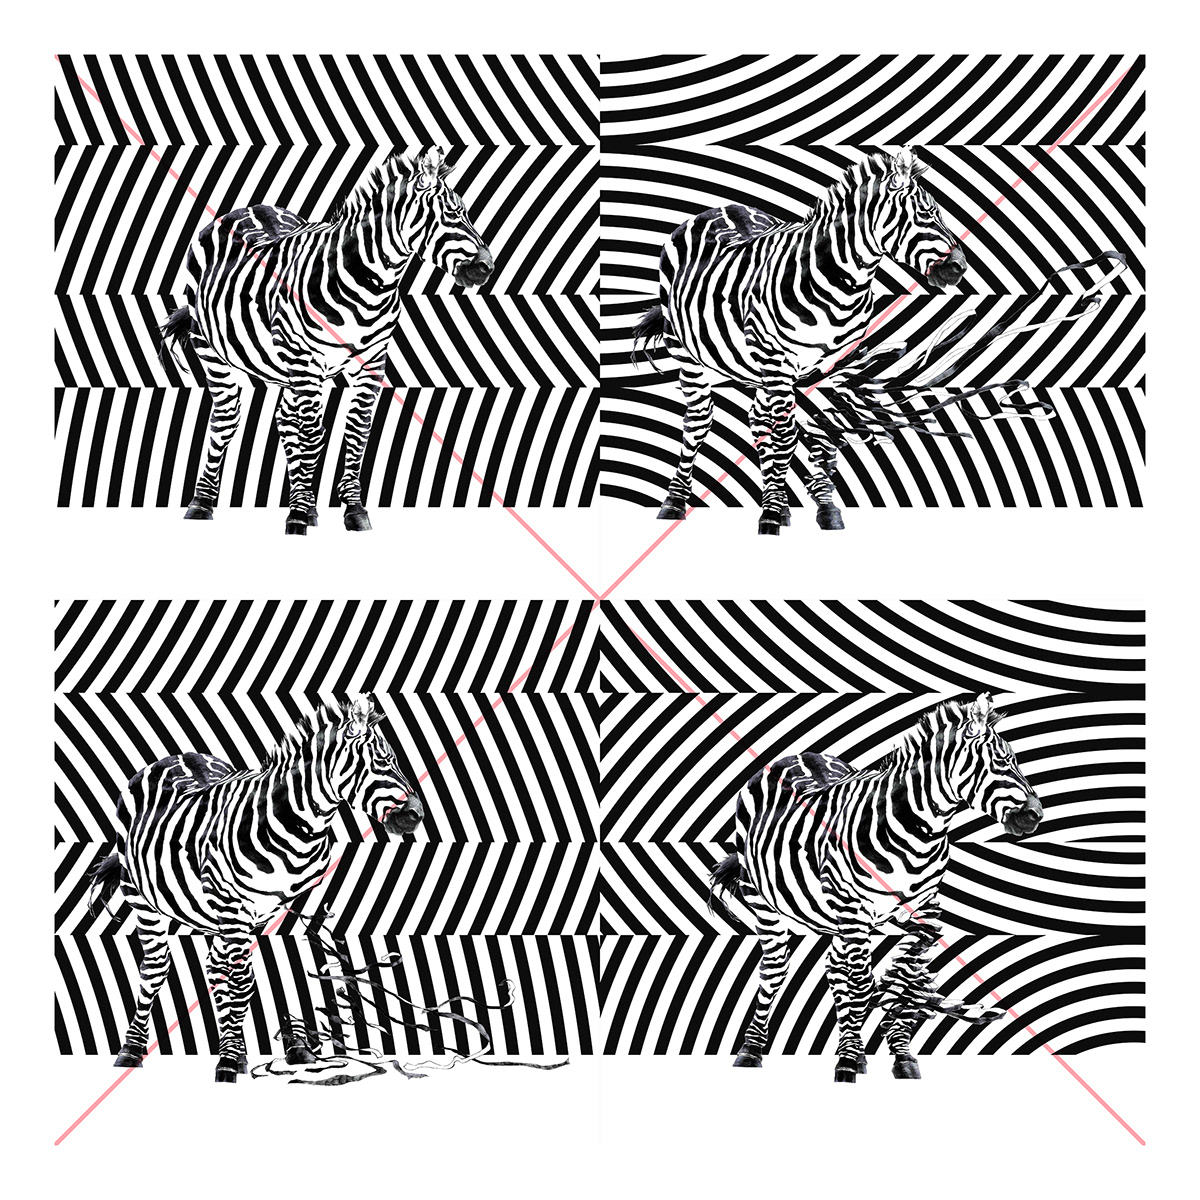 art Andy Warhol black and white zebra rebel